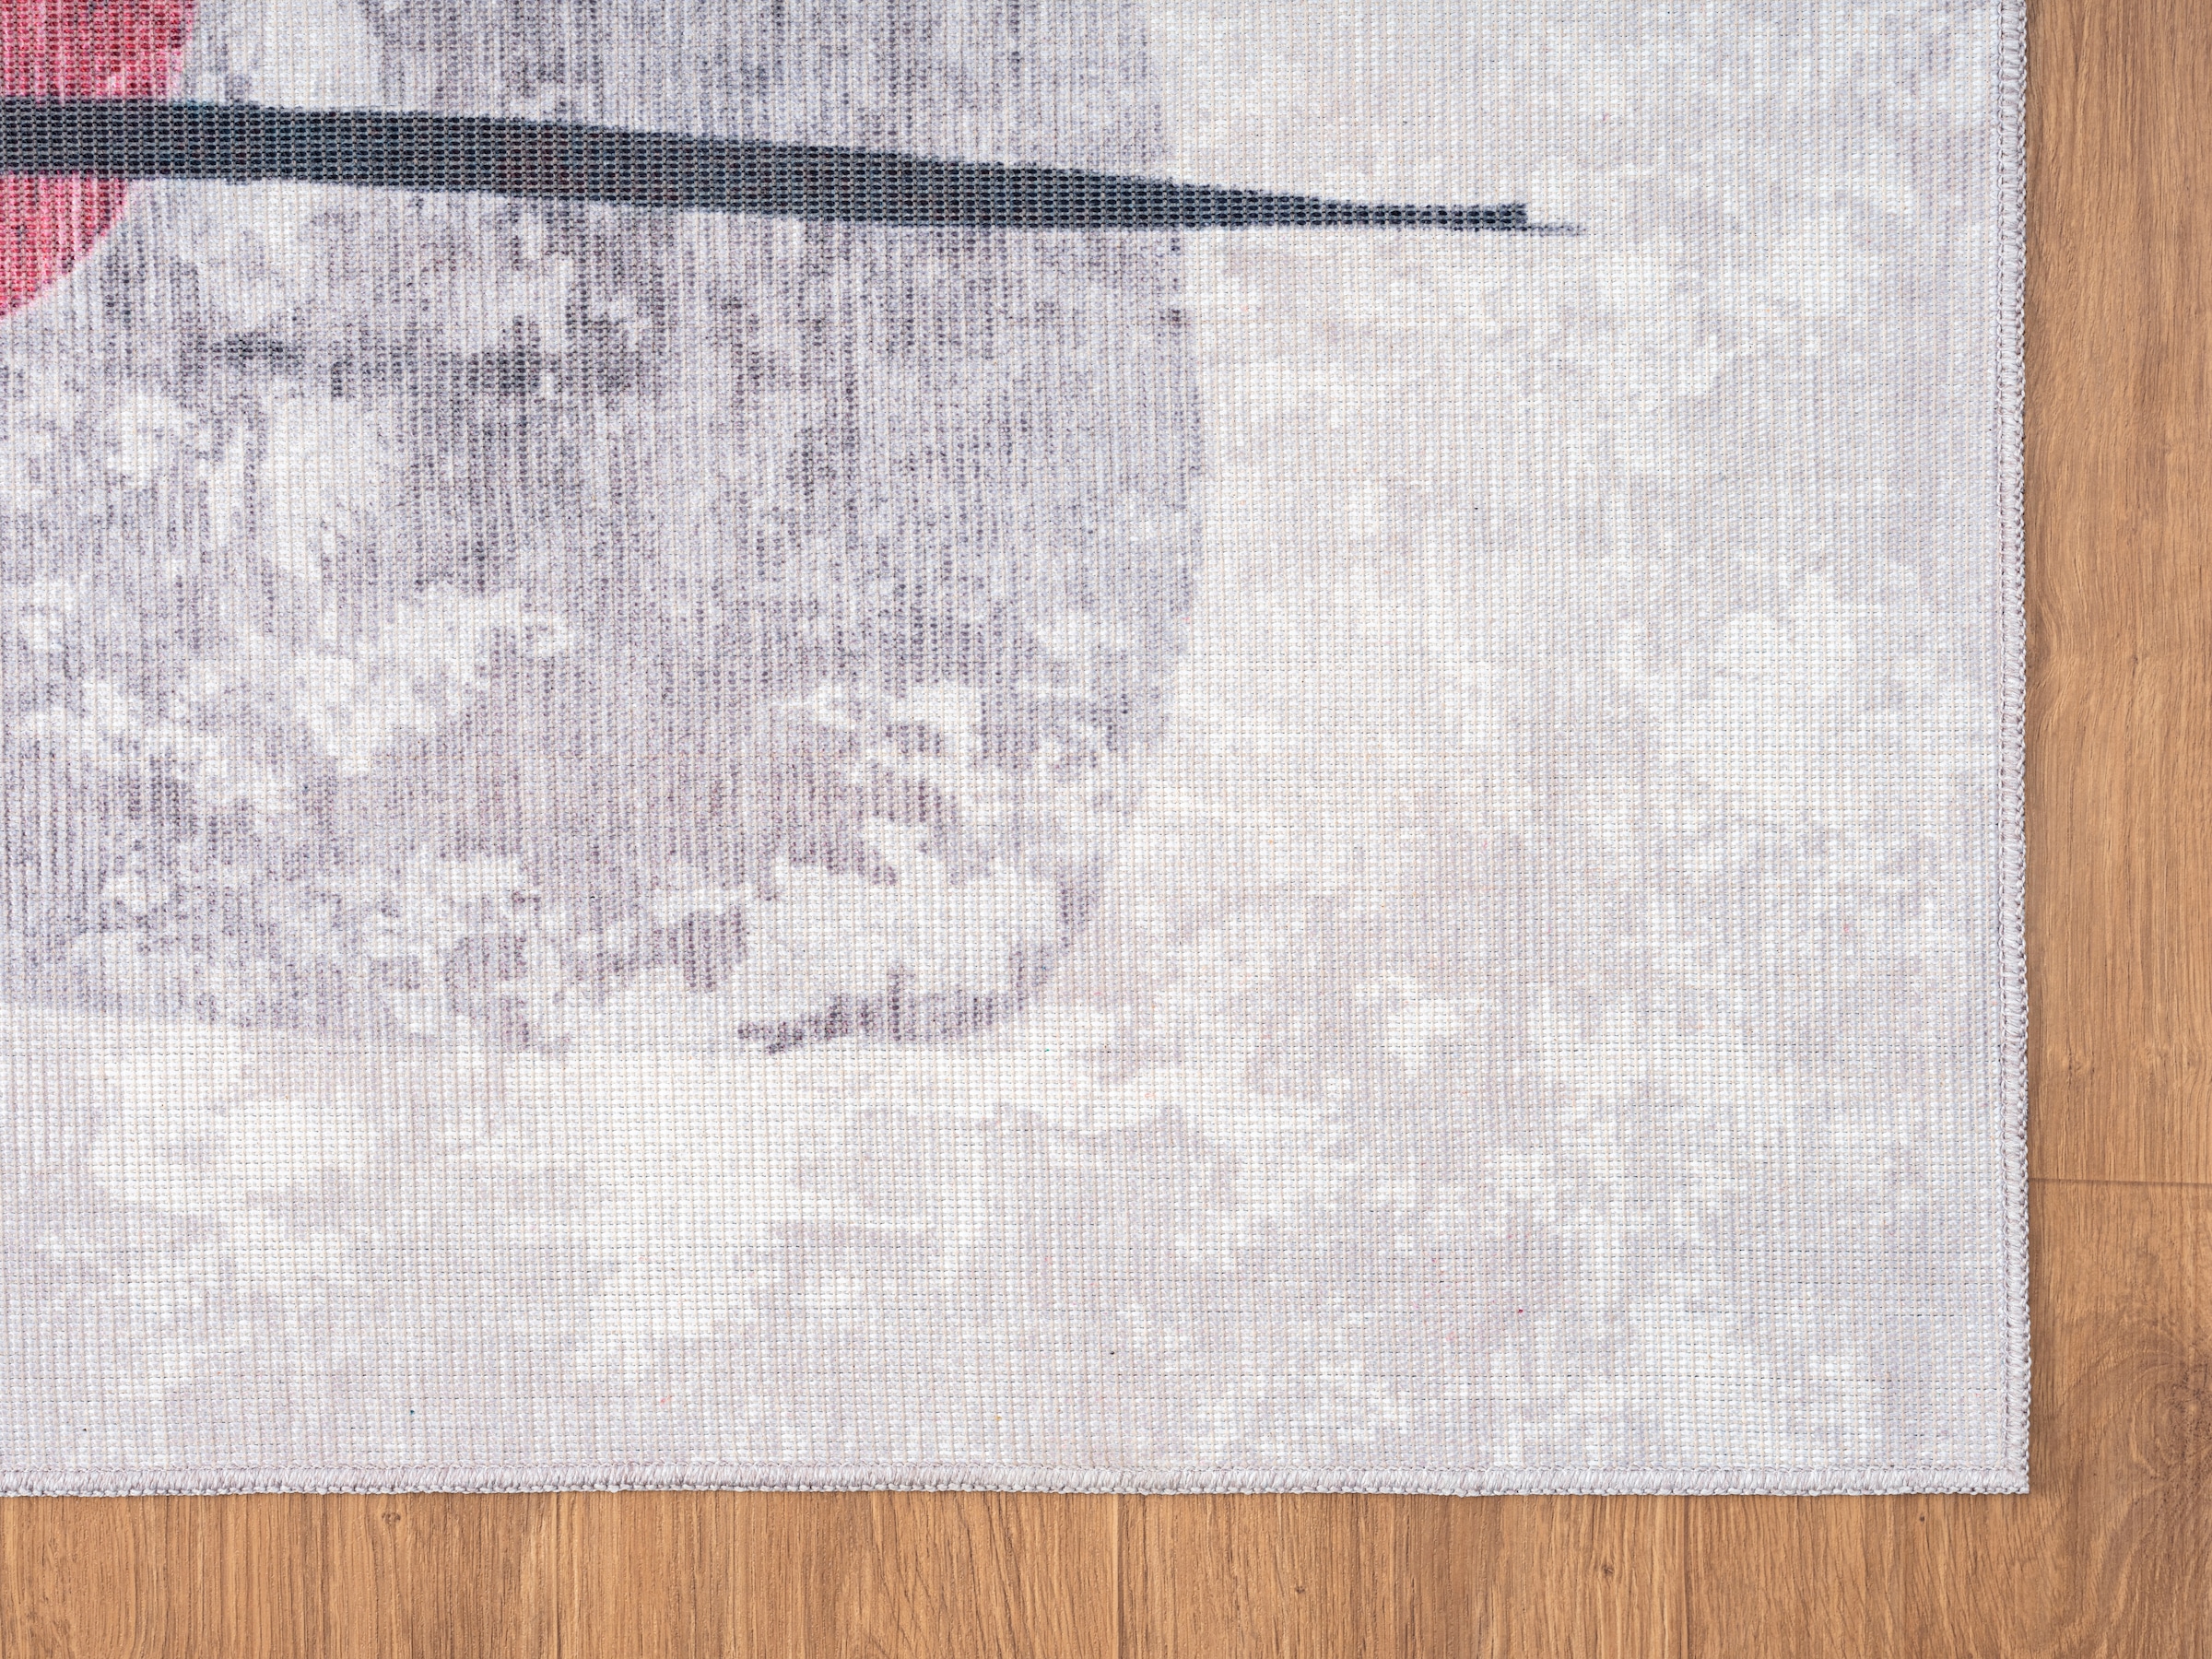 Myflair Möbel & Accessoires Teppich »Dylan«, rechteckig, bedruckt, modernes Design, In- & Outdoor geeignet, waschbar